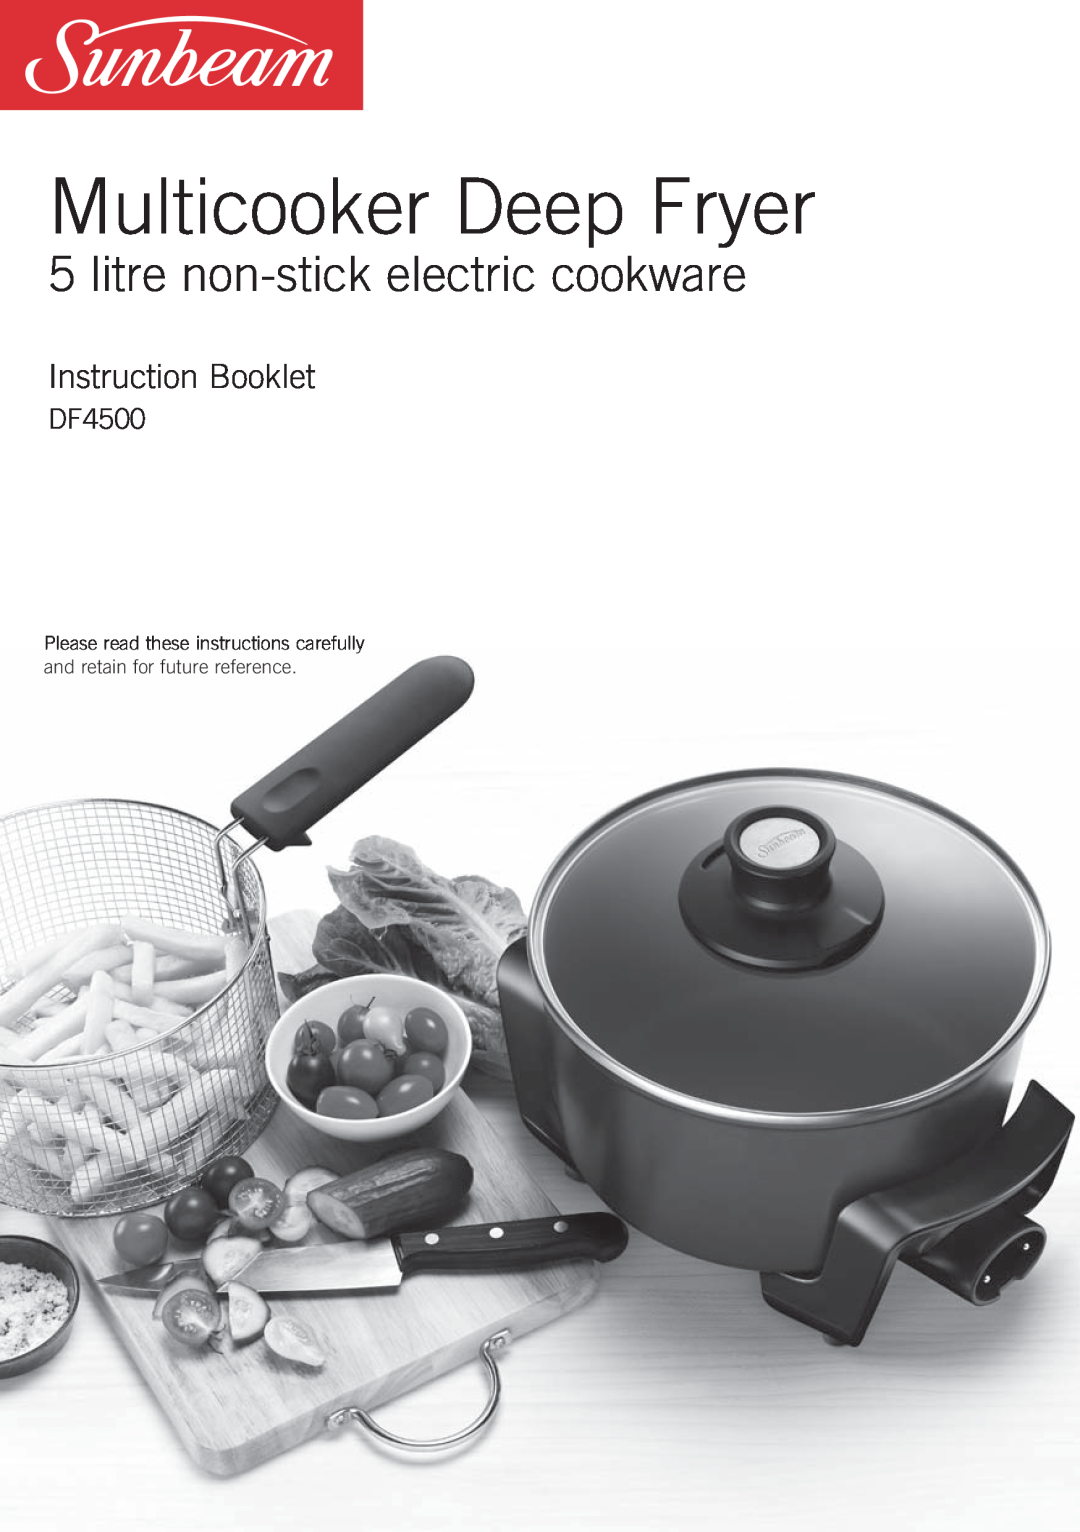 Sunbeam DF4500 manual Multicooker Deep Fryer, litre non-stickelectric cookware, Instruction Booklet 